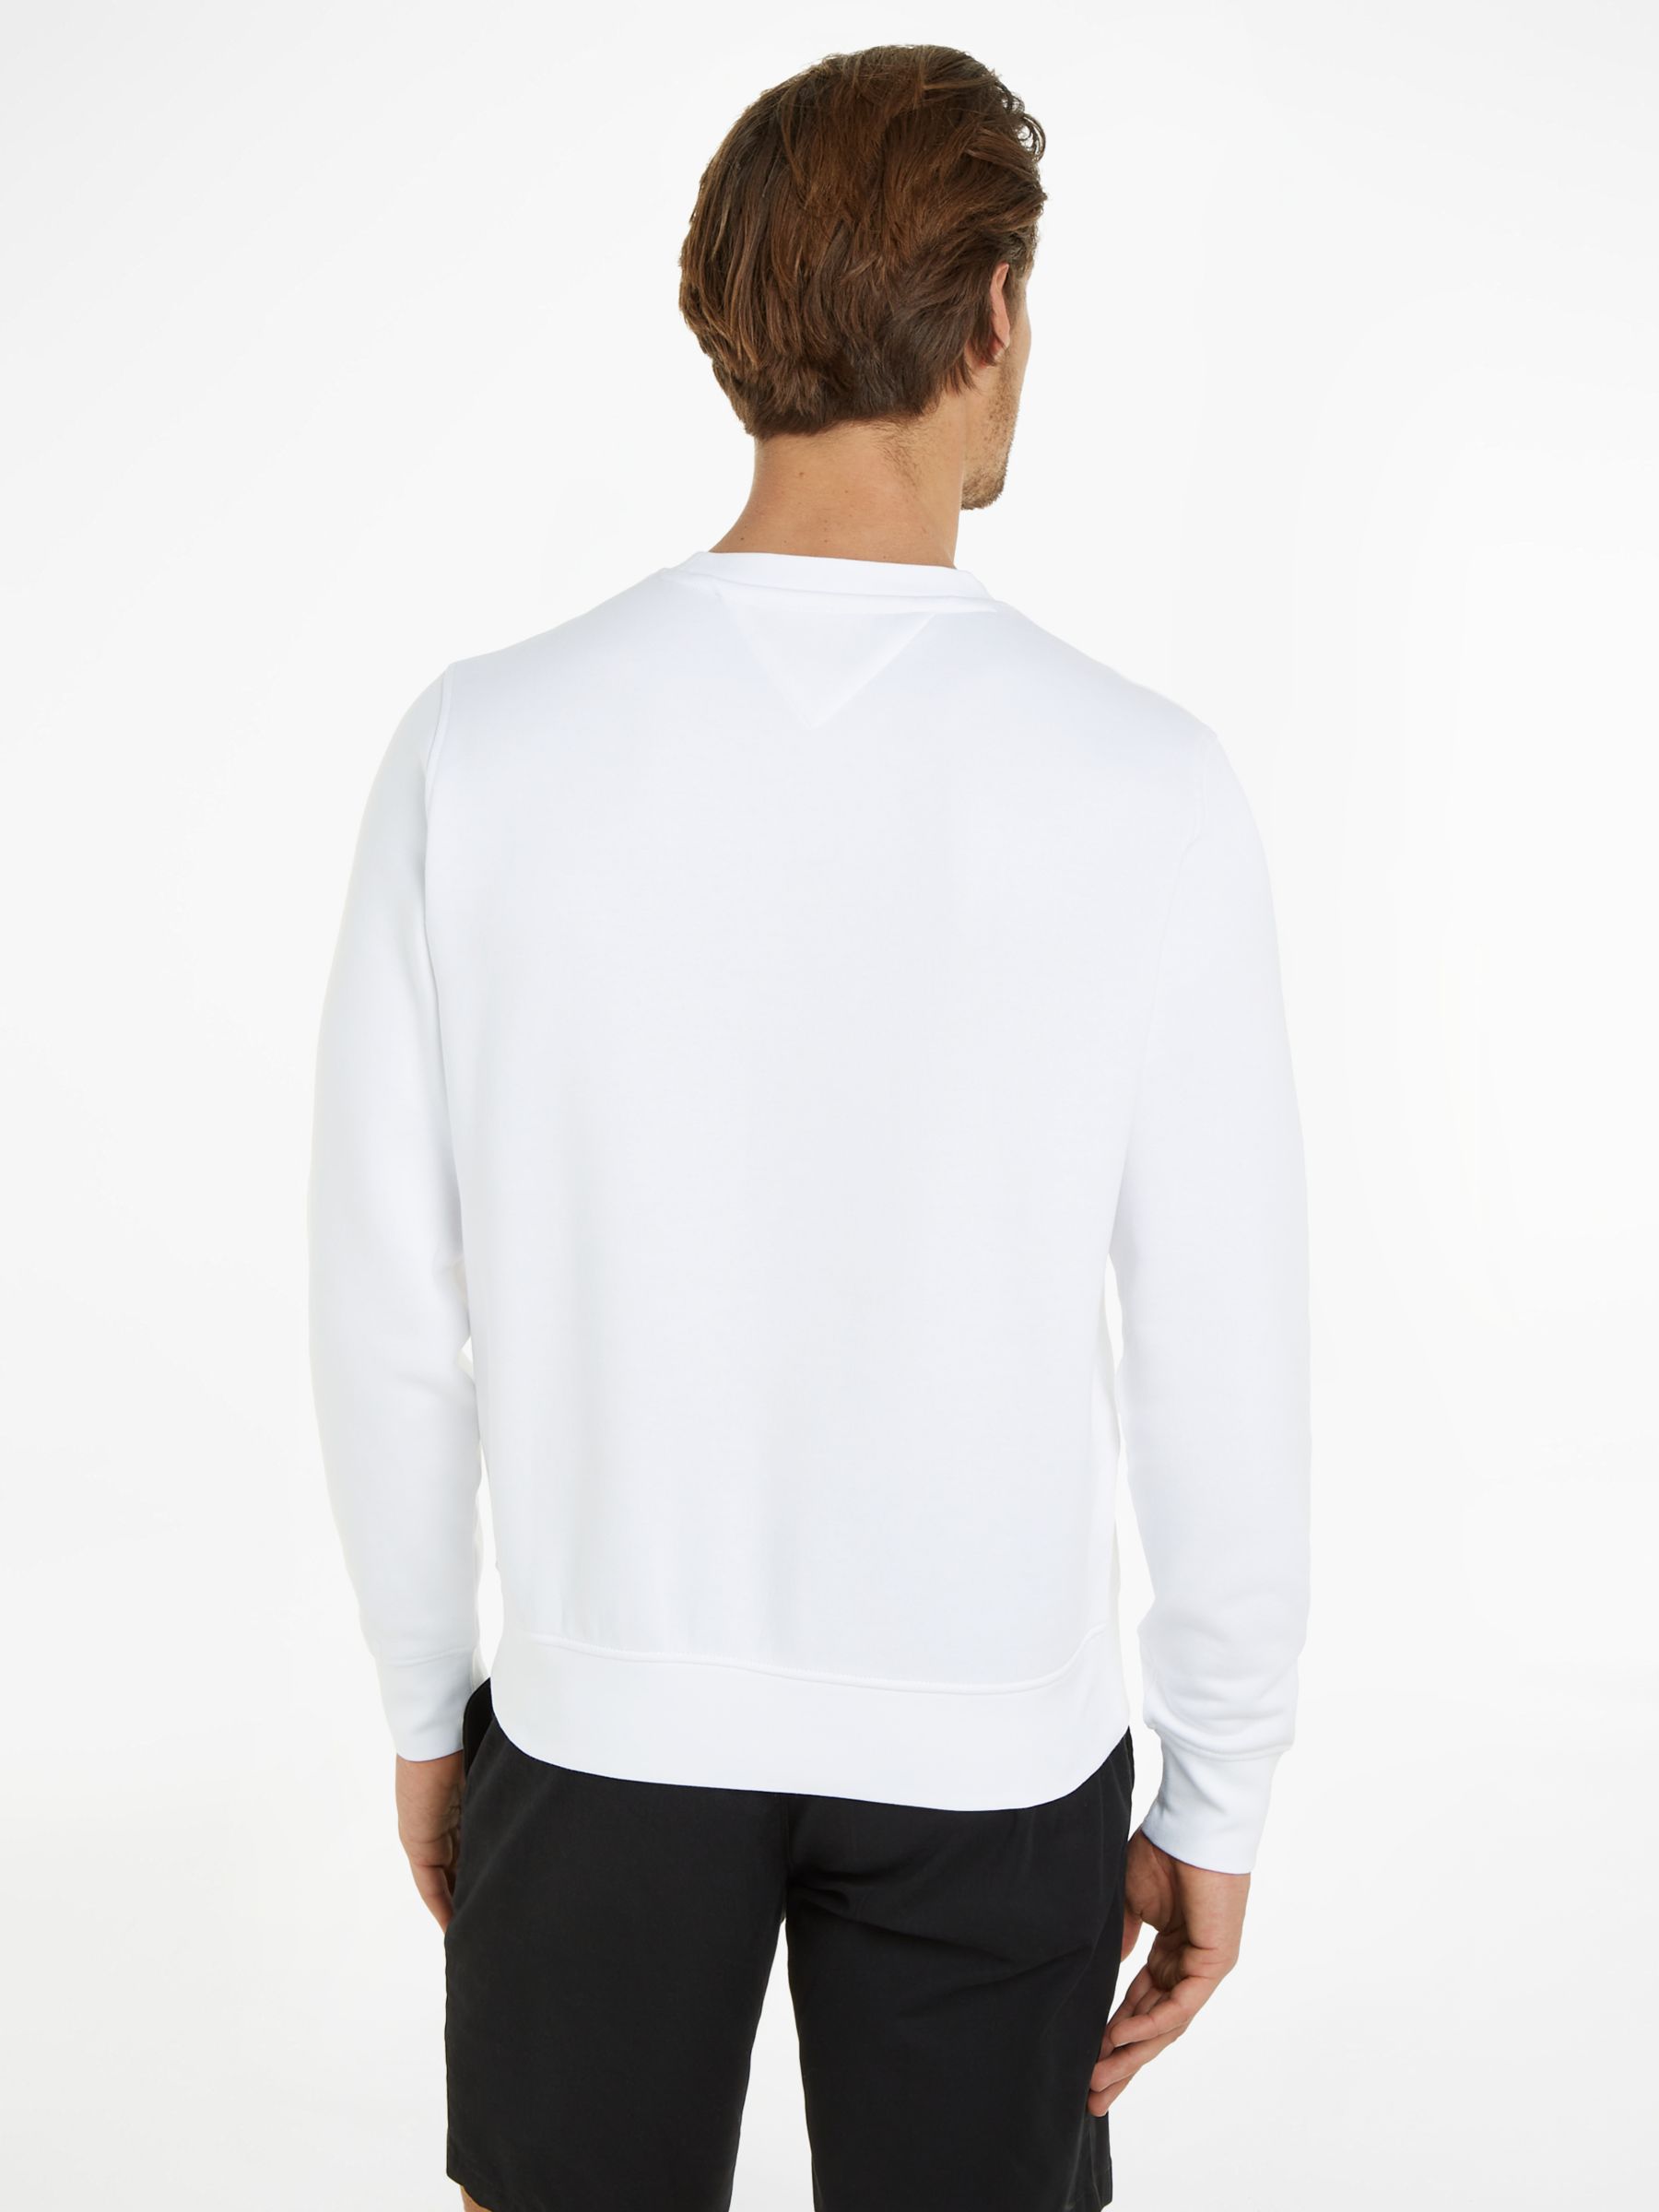 Tommy Hilfiger Flag Logo Sweatshirt, White, XS